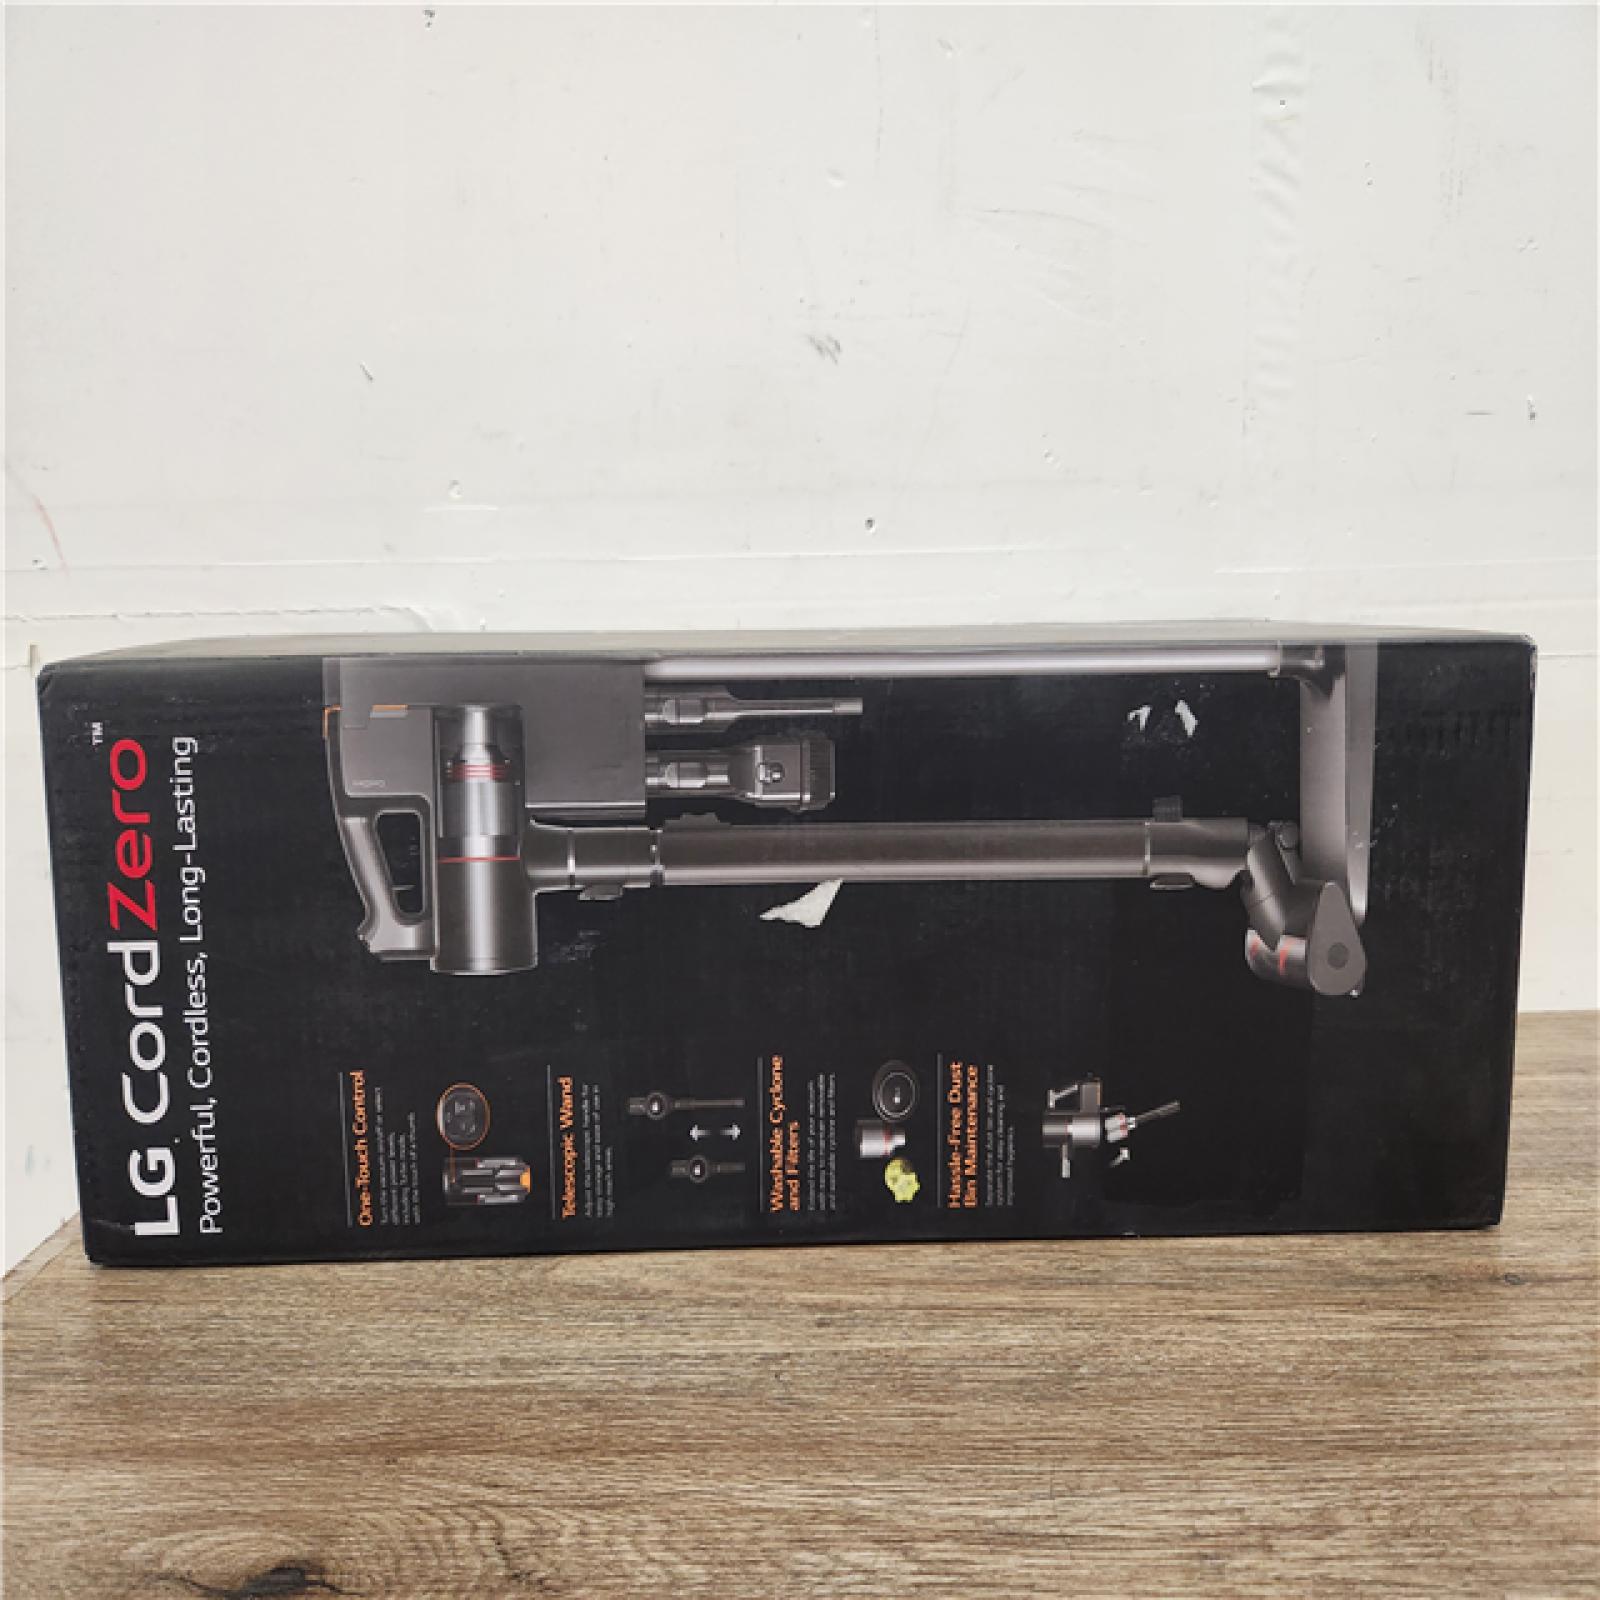 Phoenix Location NEW SEALED LG CordZero A9 Cordless Stick Vacuum Cleaner